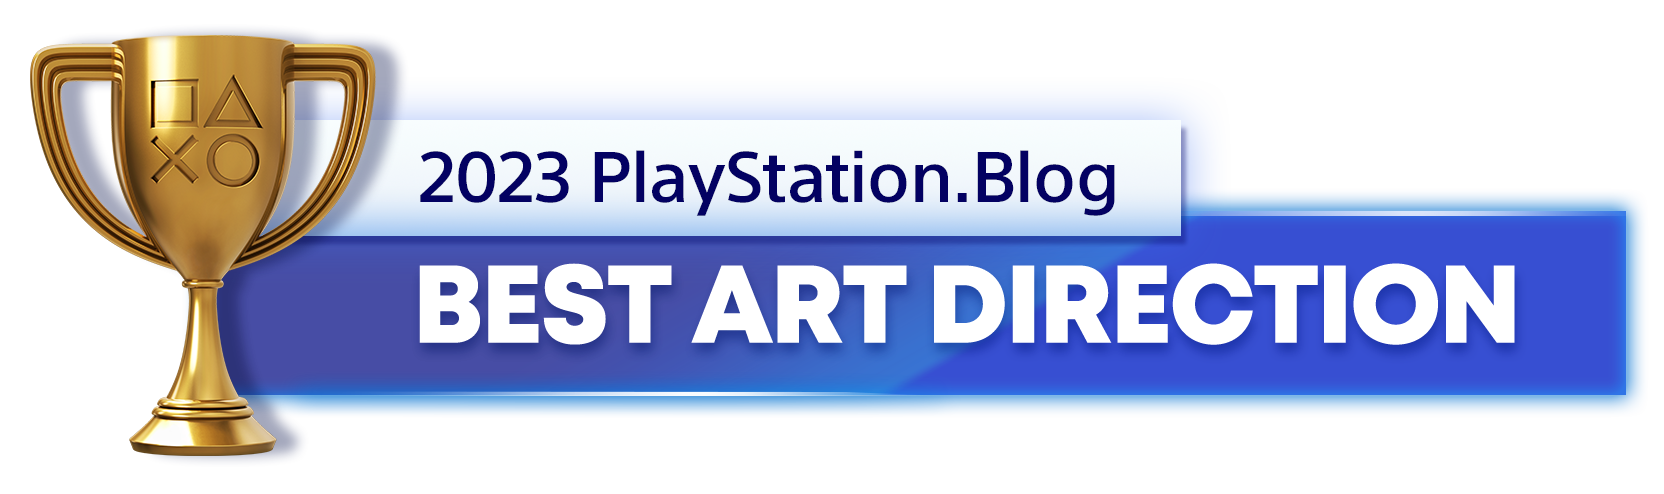  "Gold Trophy for the 2023 PlayStation Blog Best Art Direction Winner"